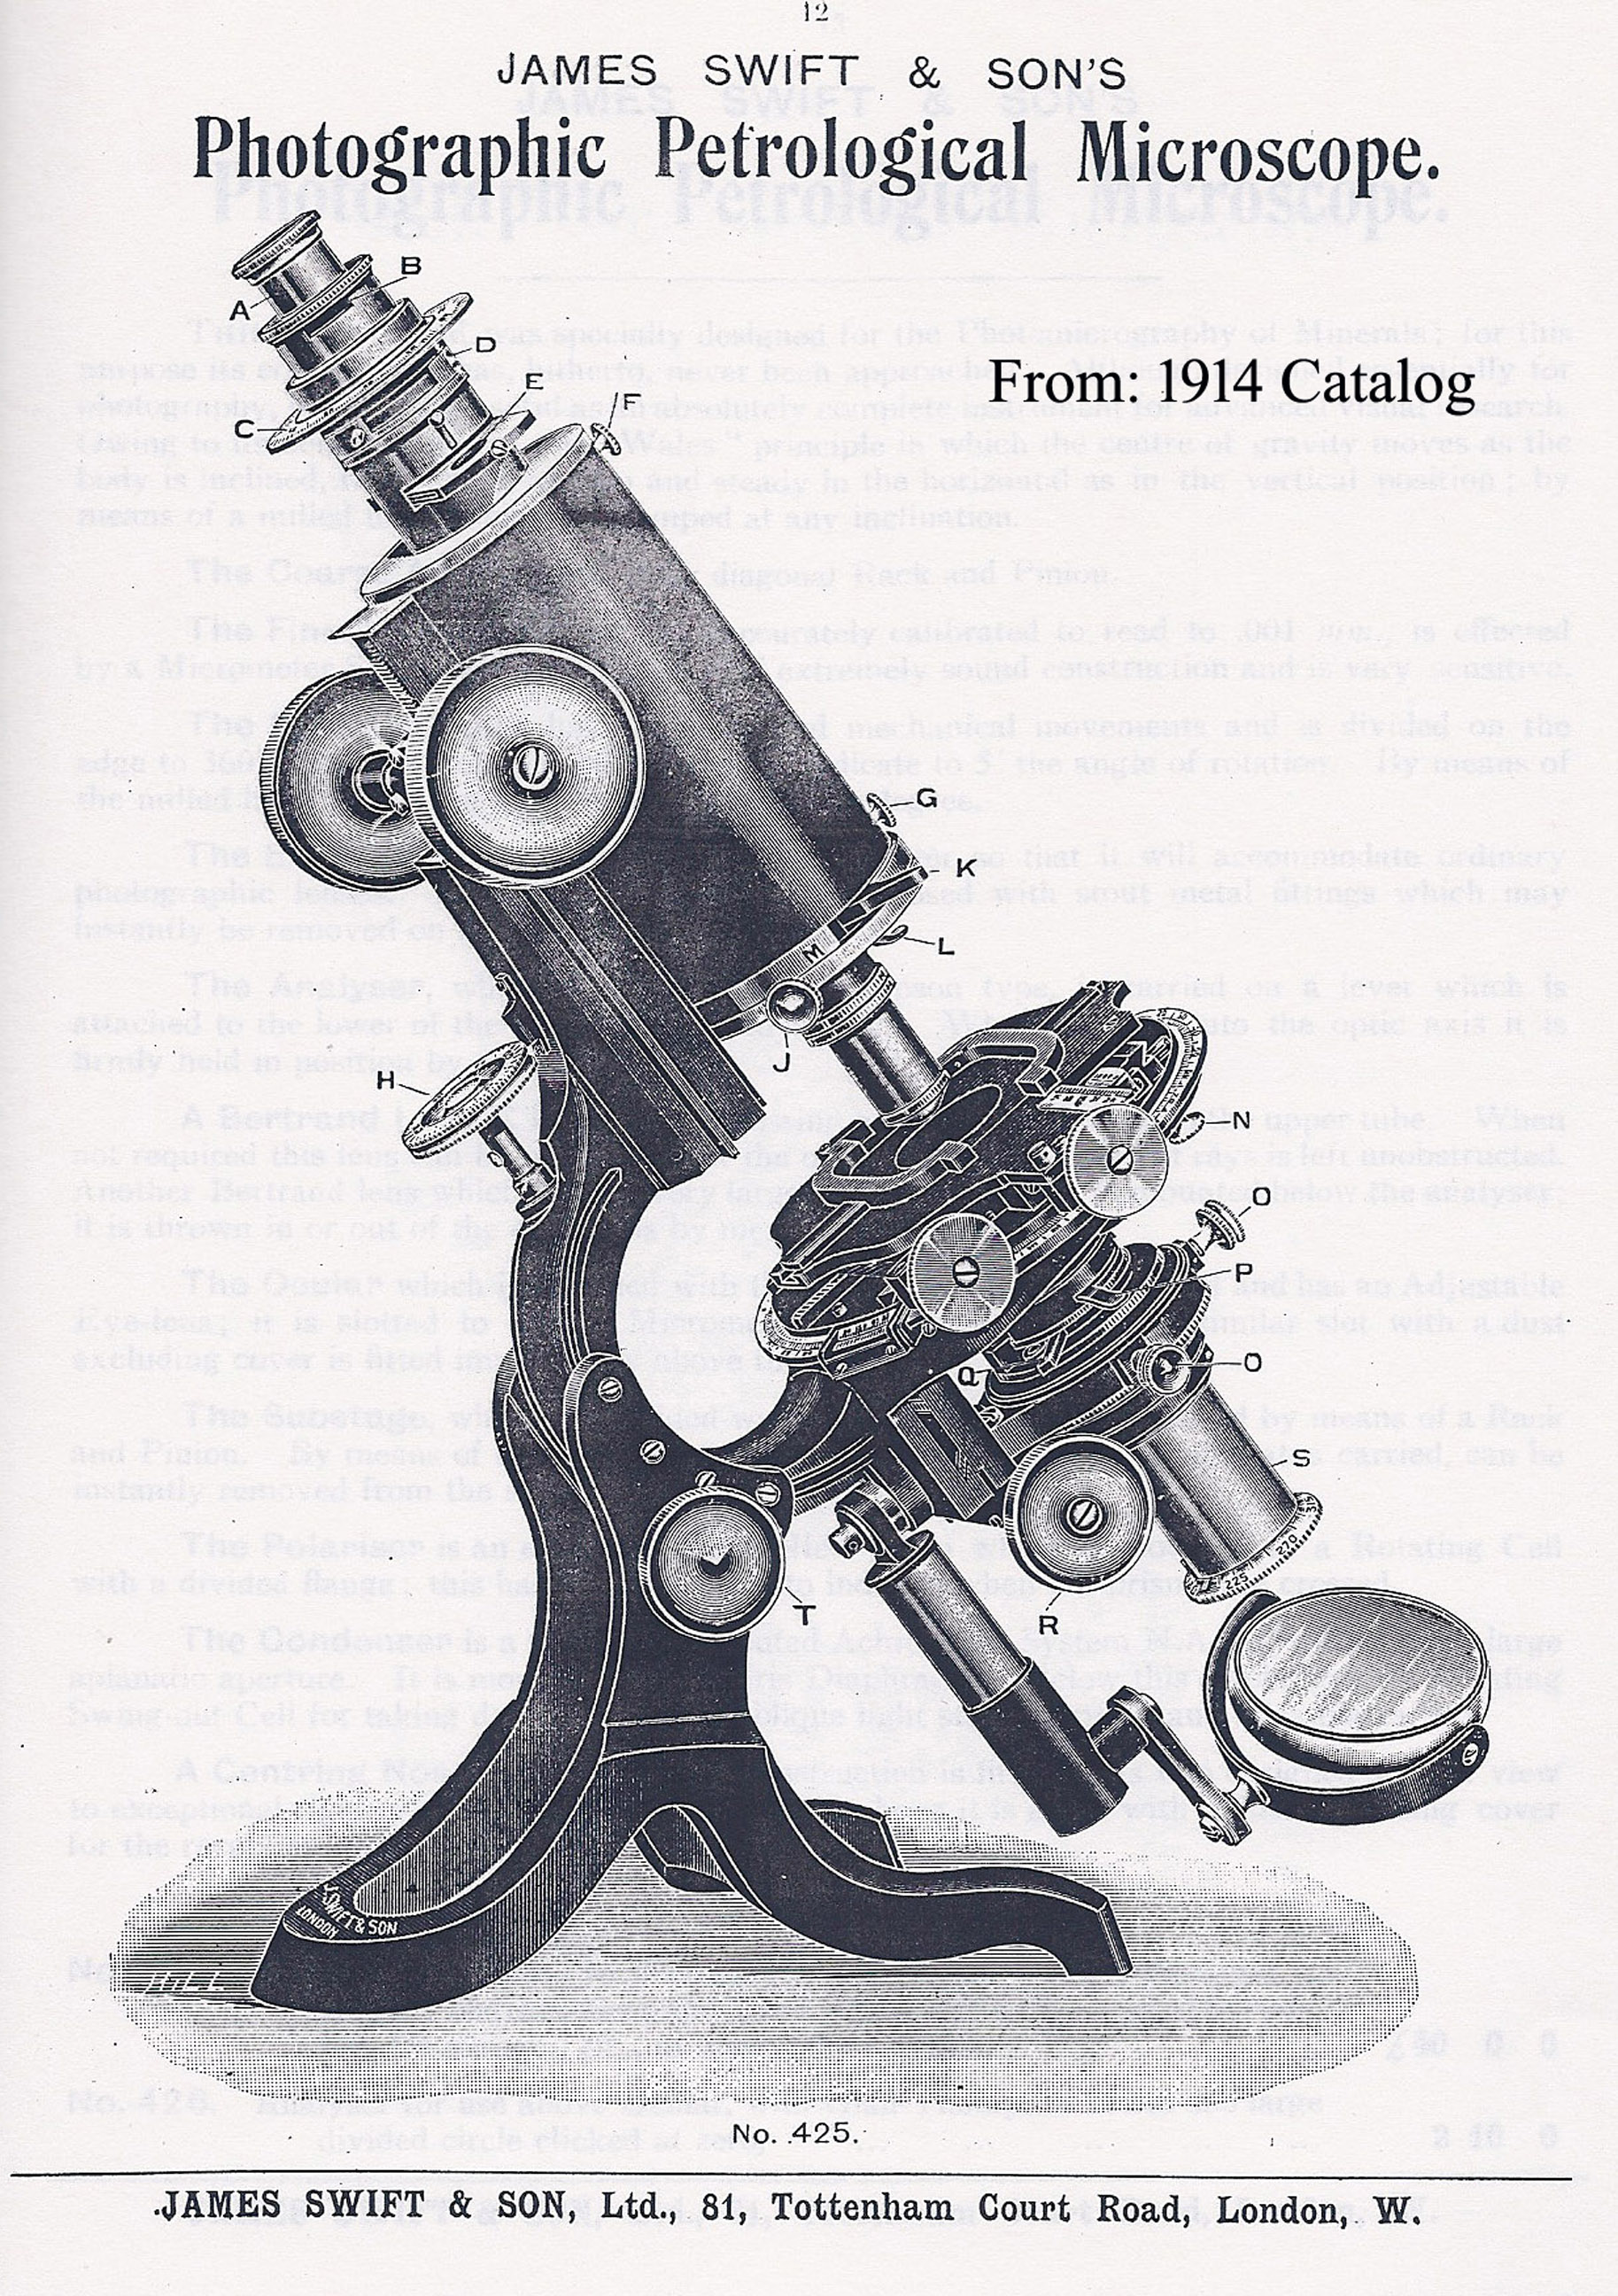 Swift Photographic petrographic Wale limb microscope from 1914 catalog